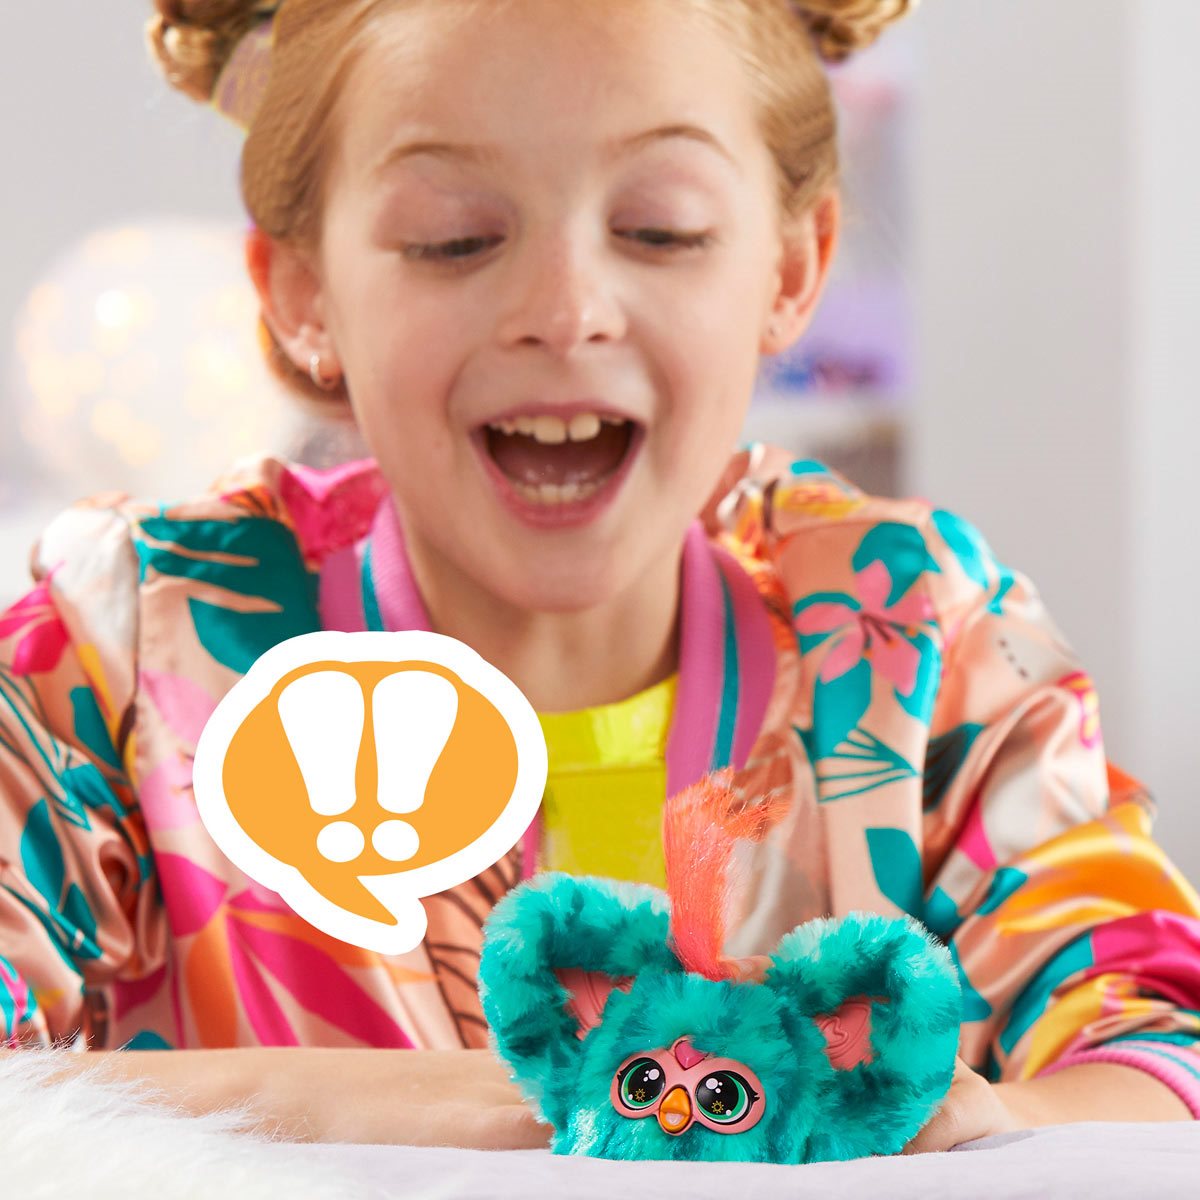 Furby Furblets Luv-Lee K-Pop Mini Electronic Plush Toy for Girls